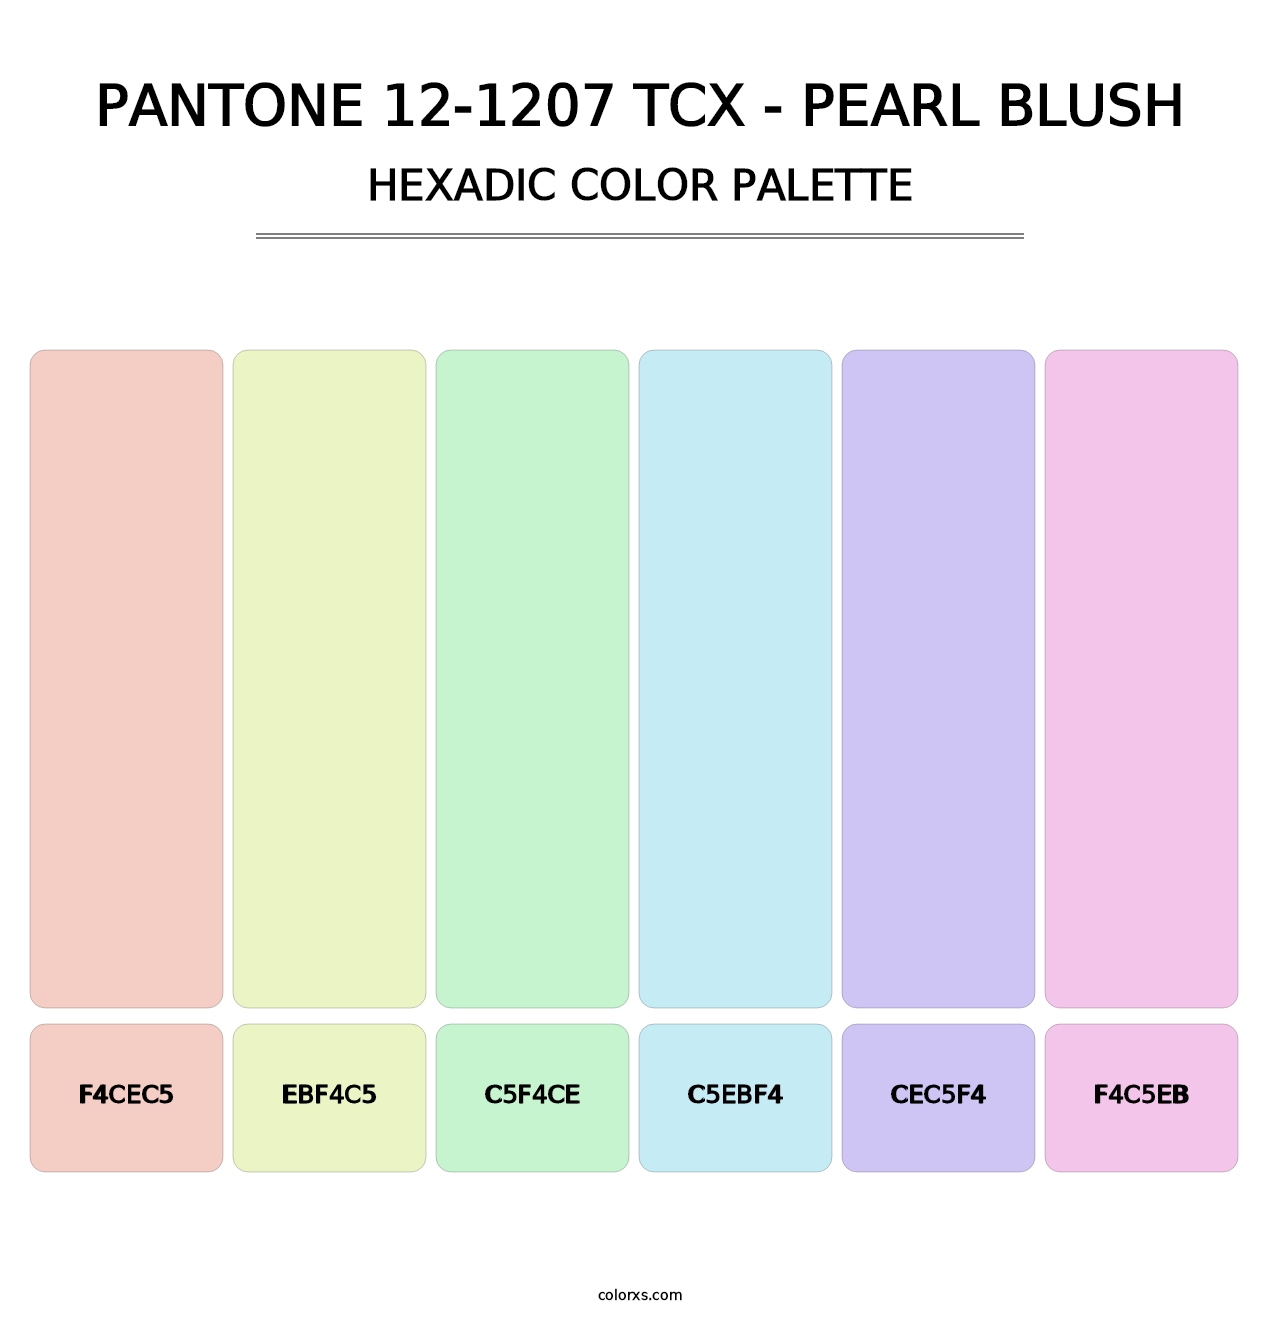 PANTONE 12-1207 TCX - Pearl Blush - Hexadic Color Palette